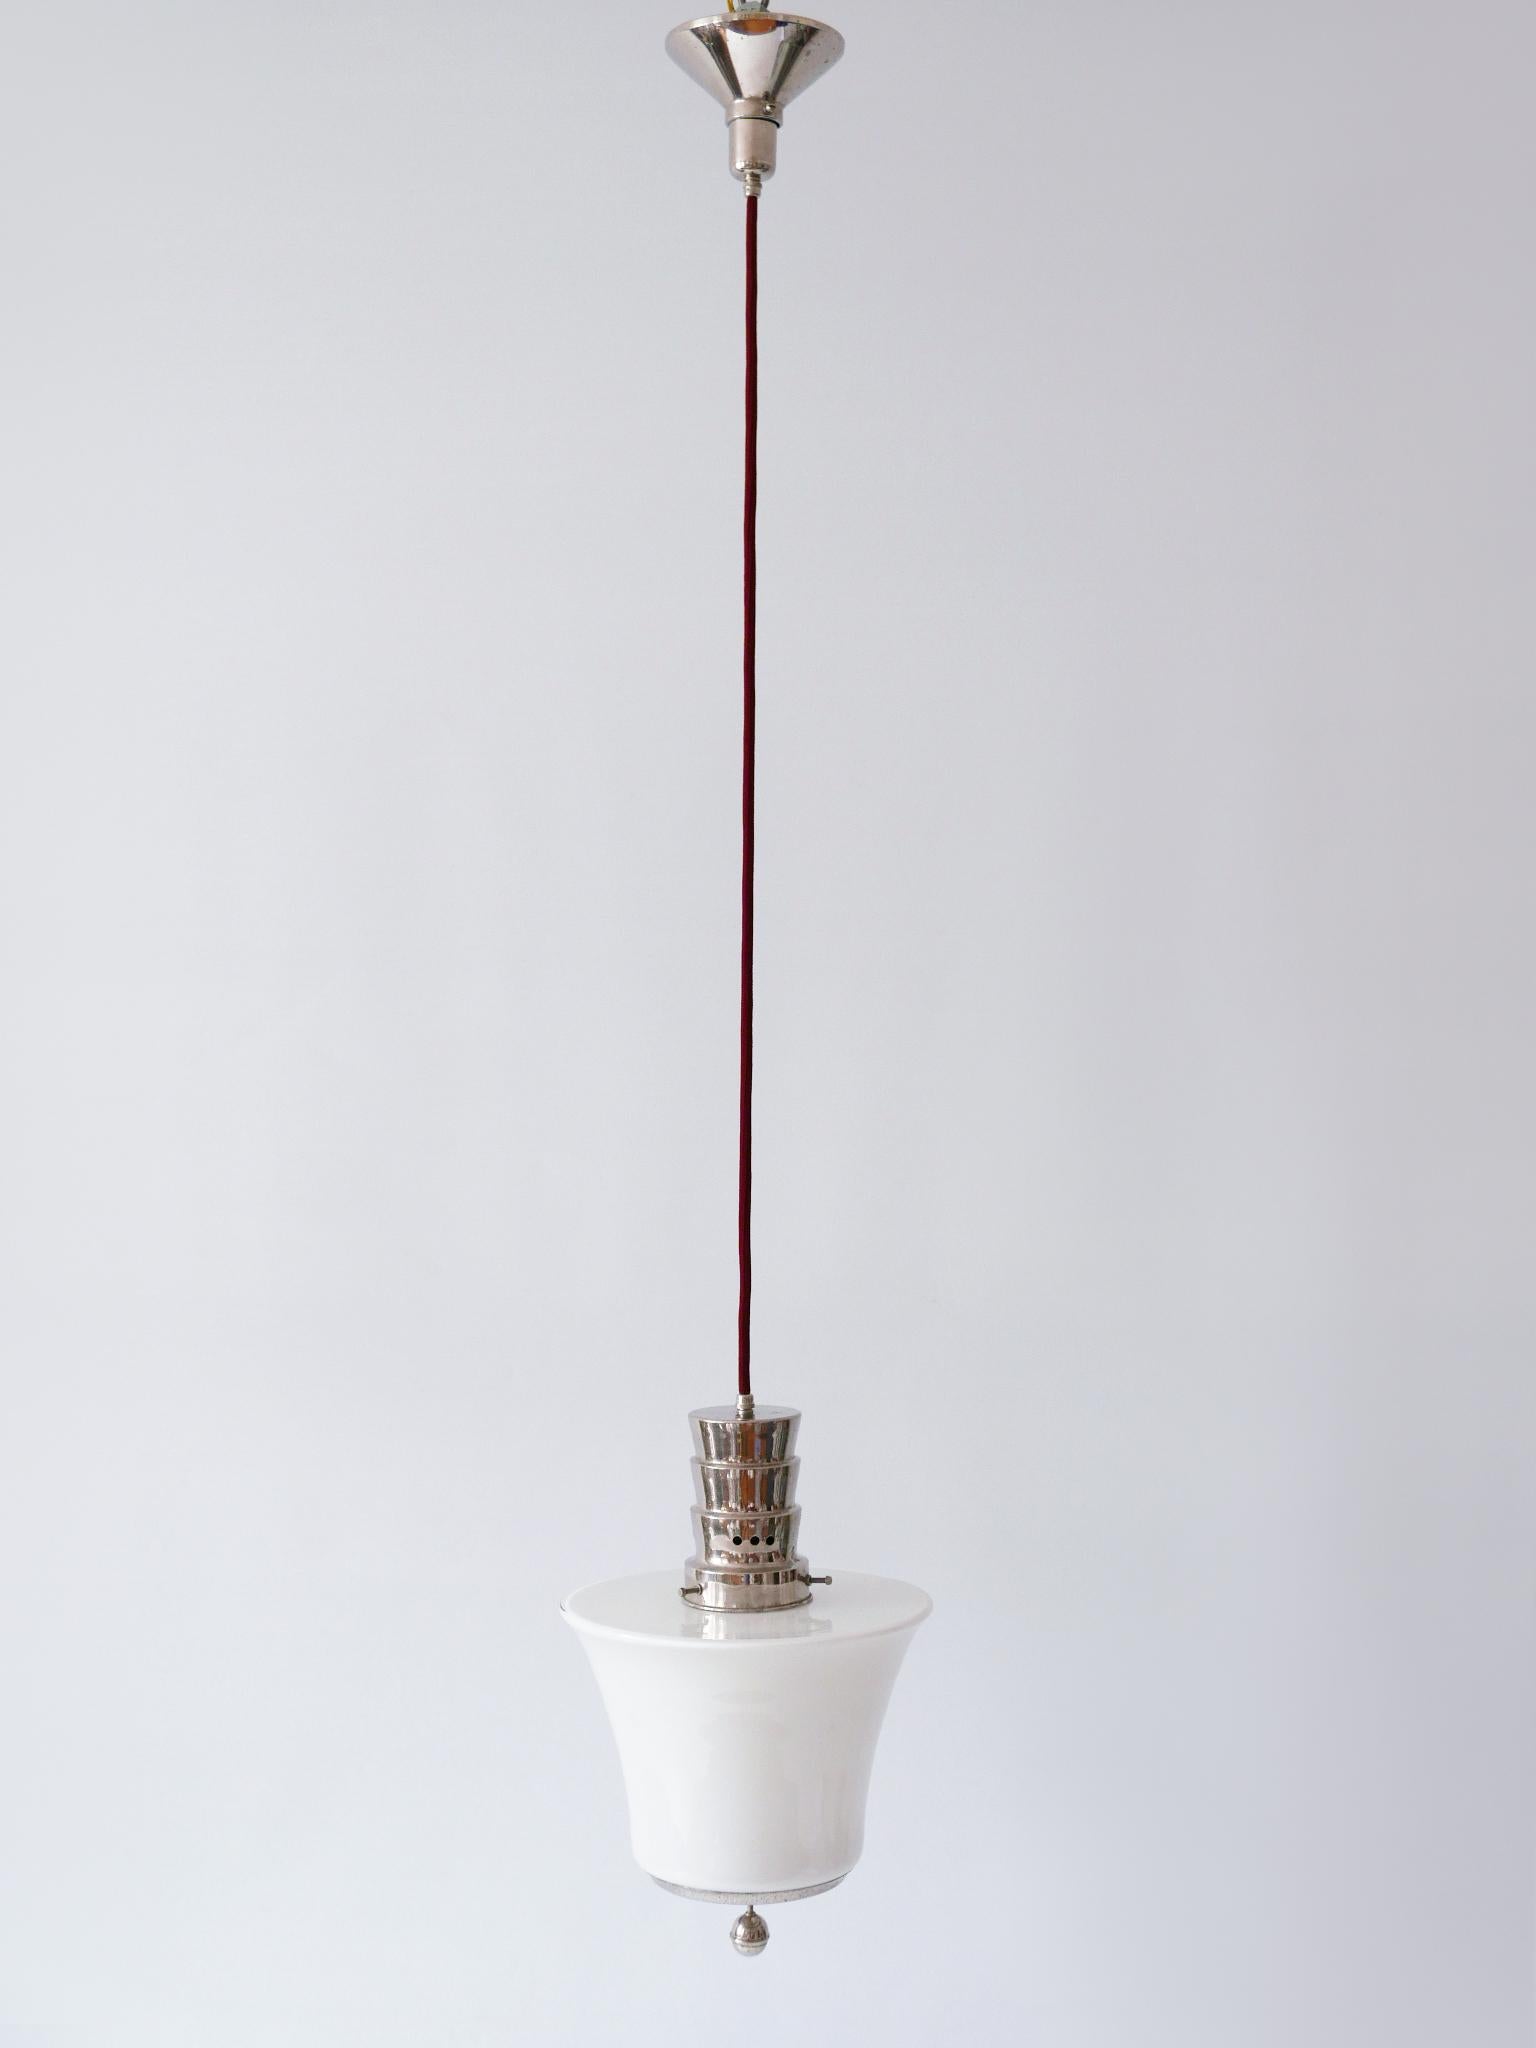 Exceptional Dr. Twerdy Original Bauhaus Art Deco Pendant Lamp, 1920s, Germany In Good Condition For Sale In Munich, DE